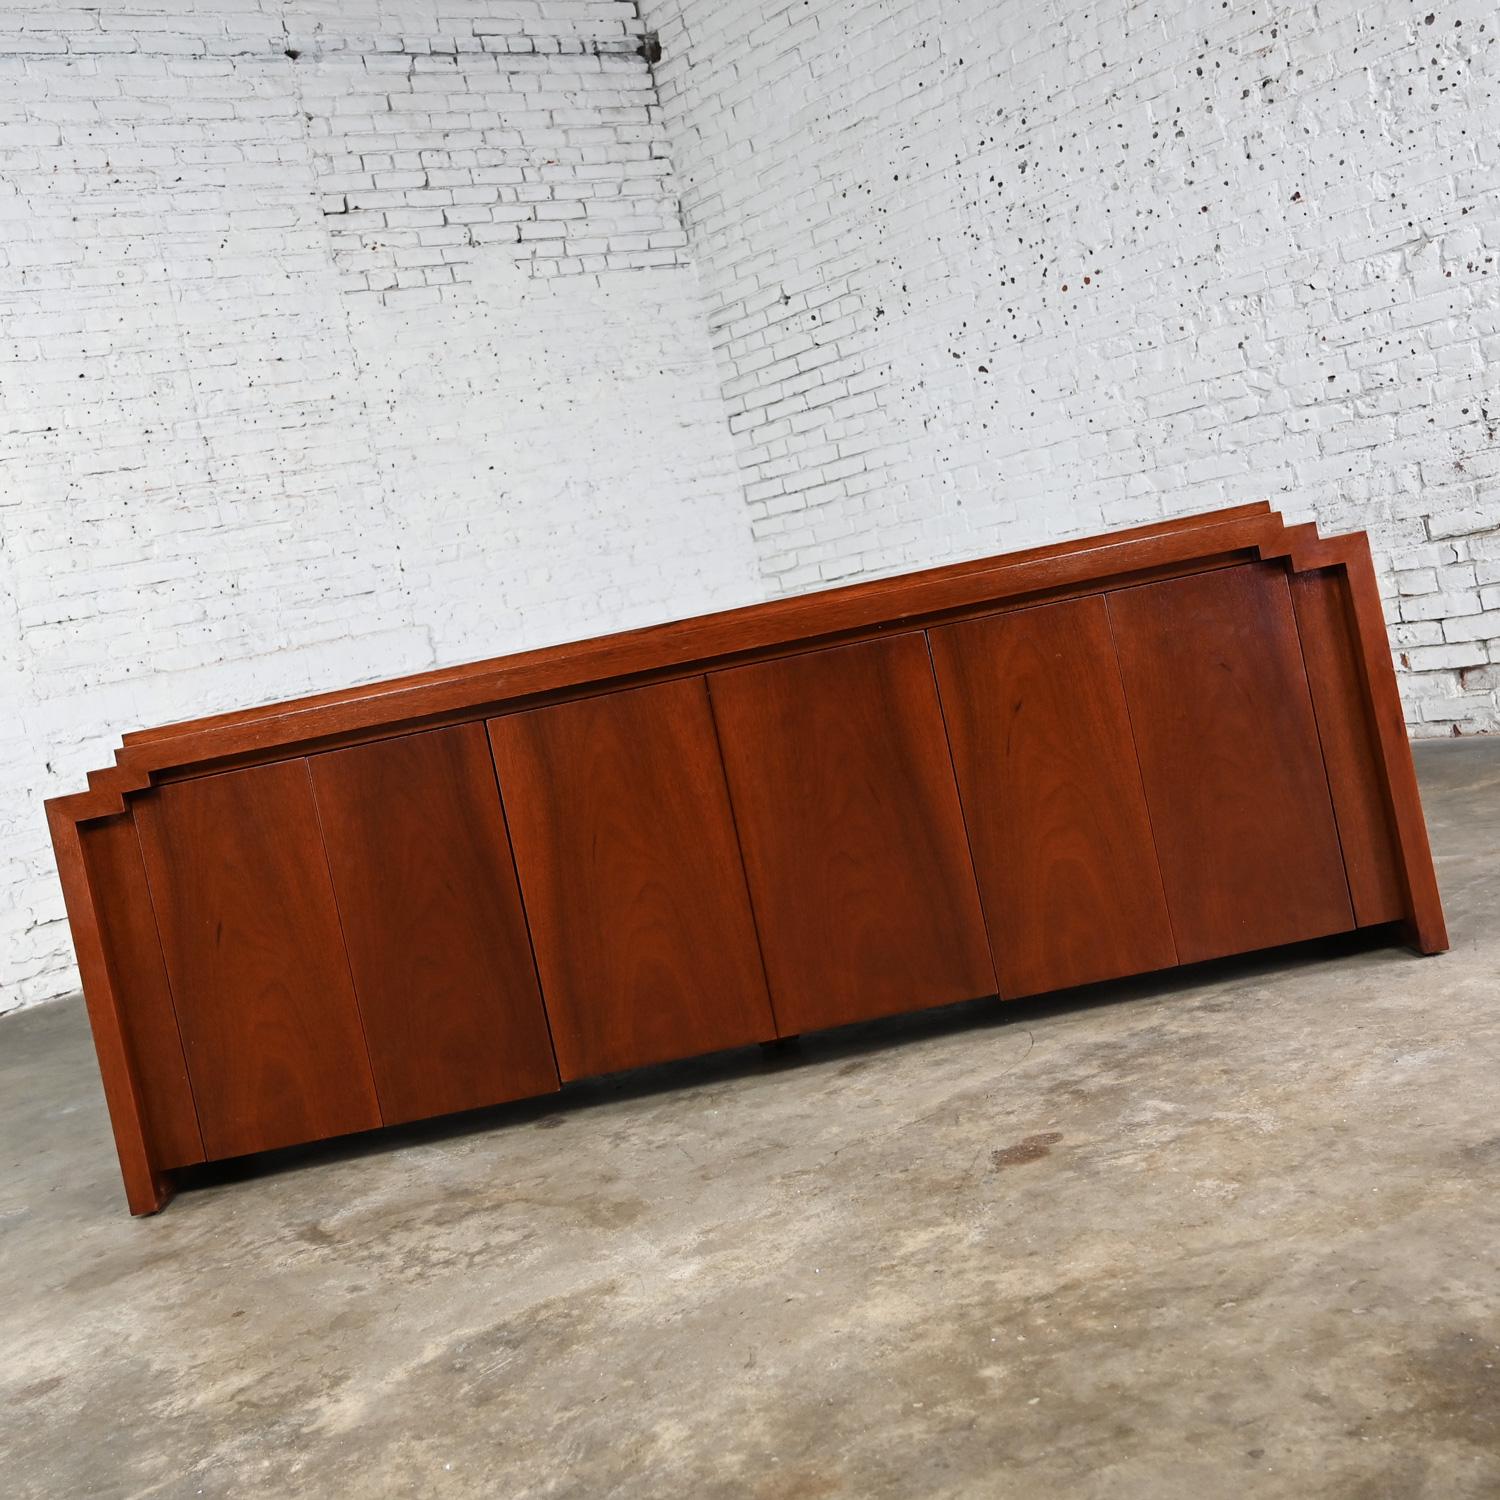 20th Century Art Deco Revival to Postmodern Custom Mahogany Credenza Sideboard Buffet Cabinet